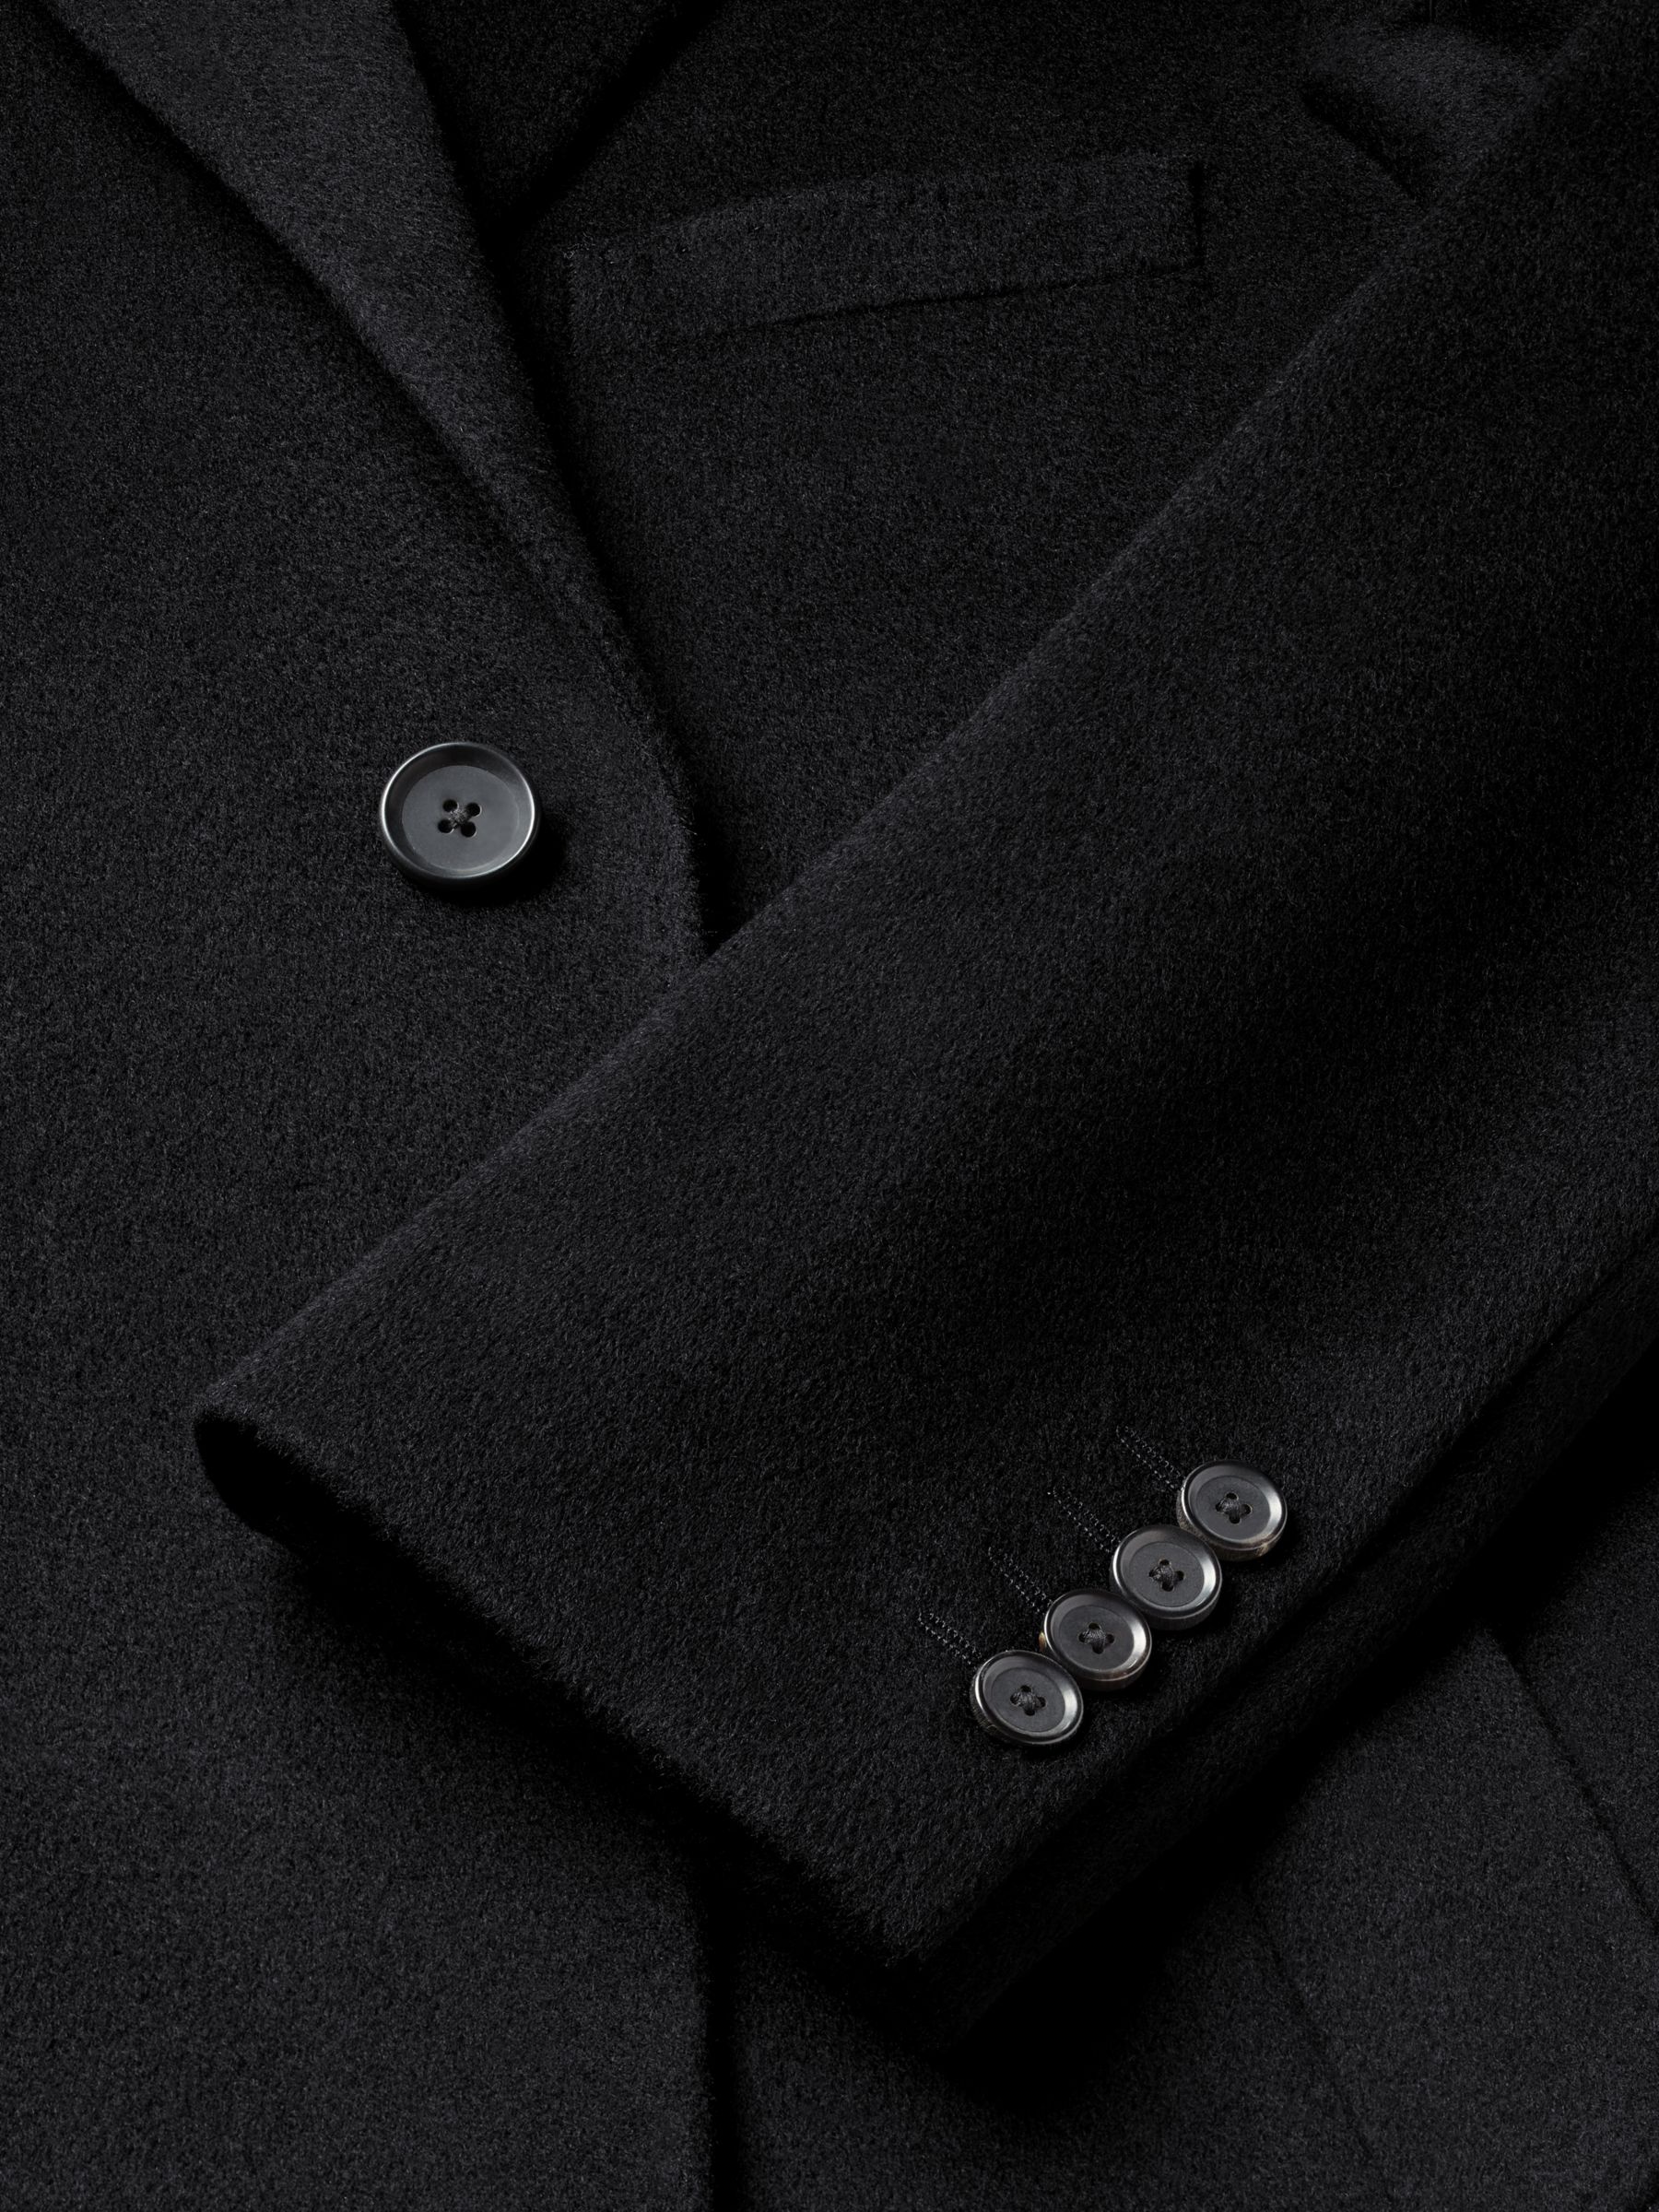 Charles Tyrwhitt Merino Wool Overcoat, Black, 36R